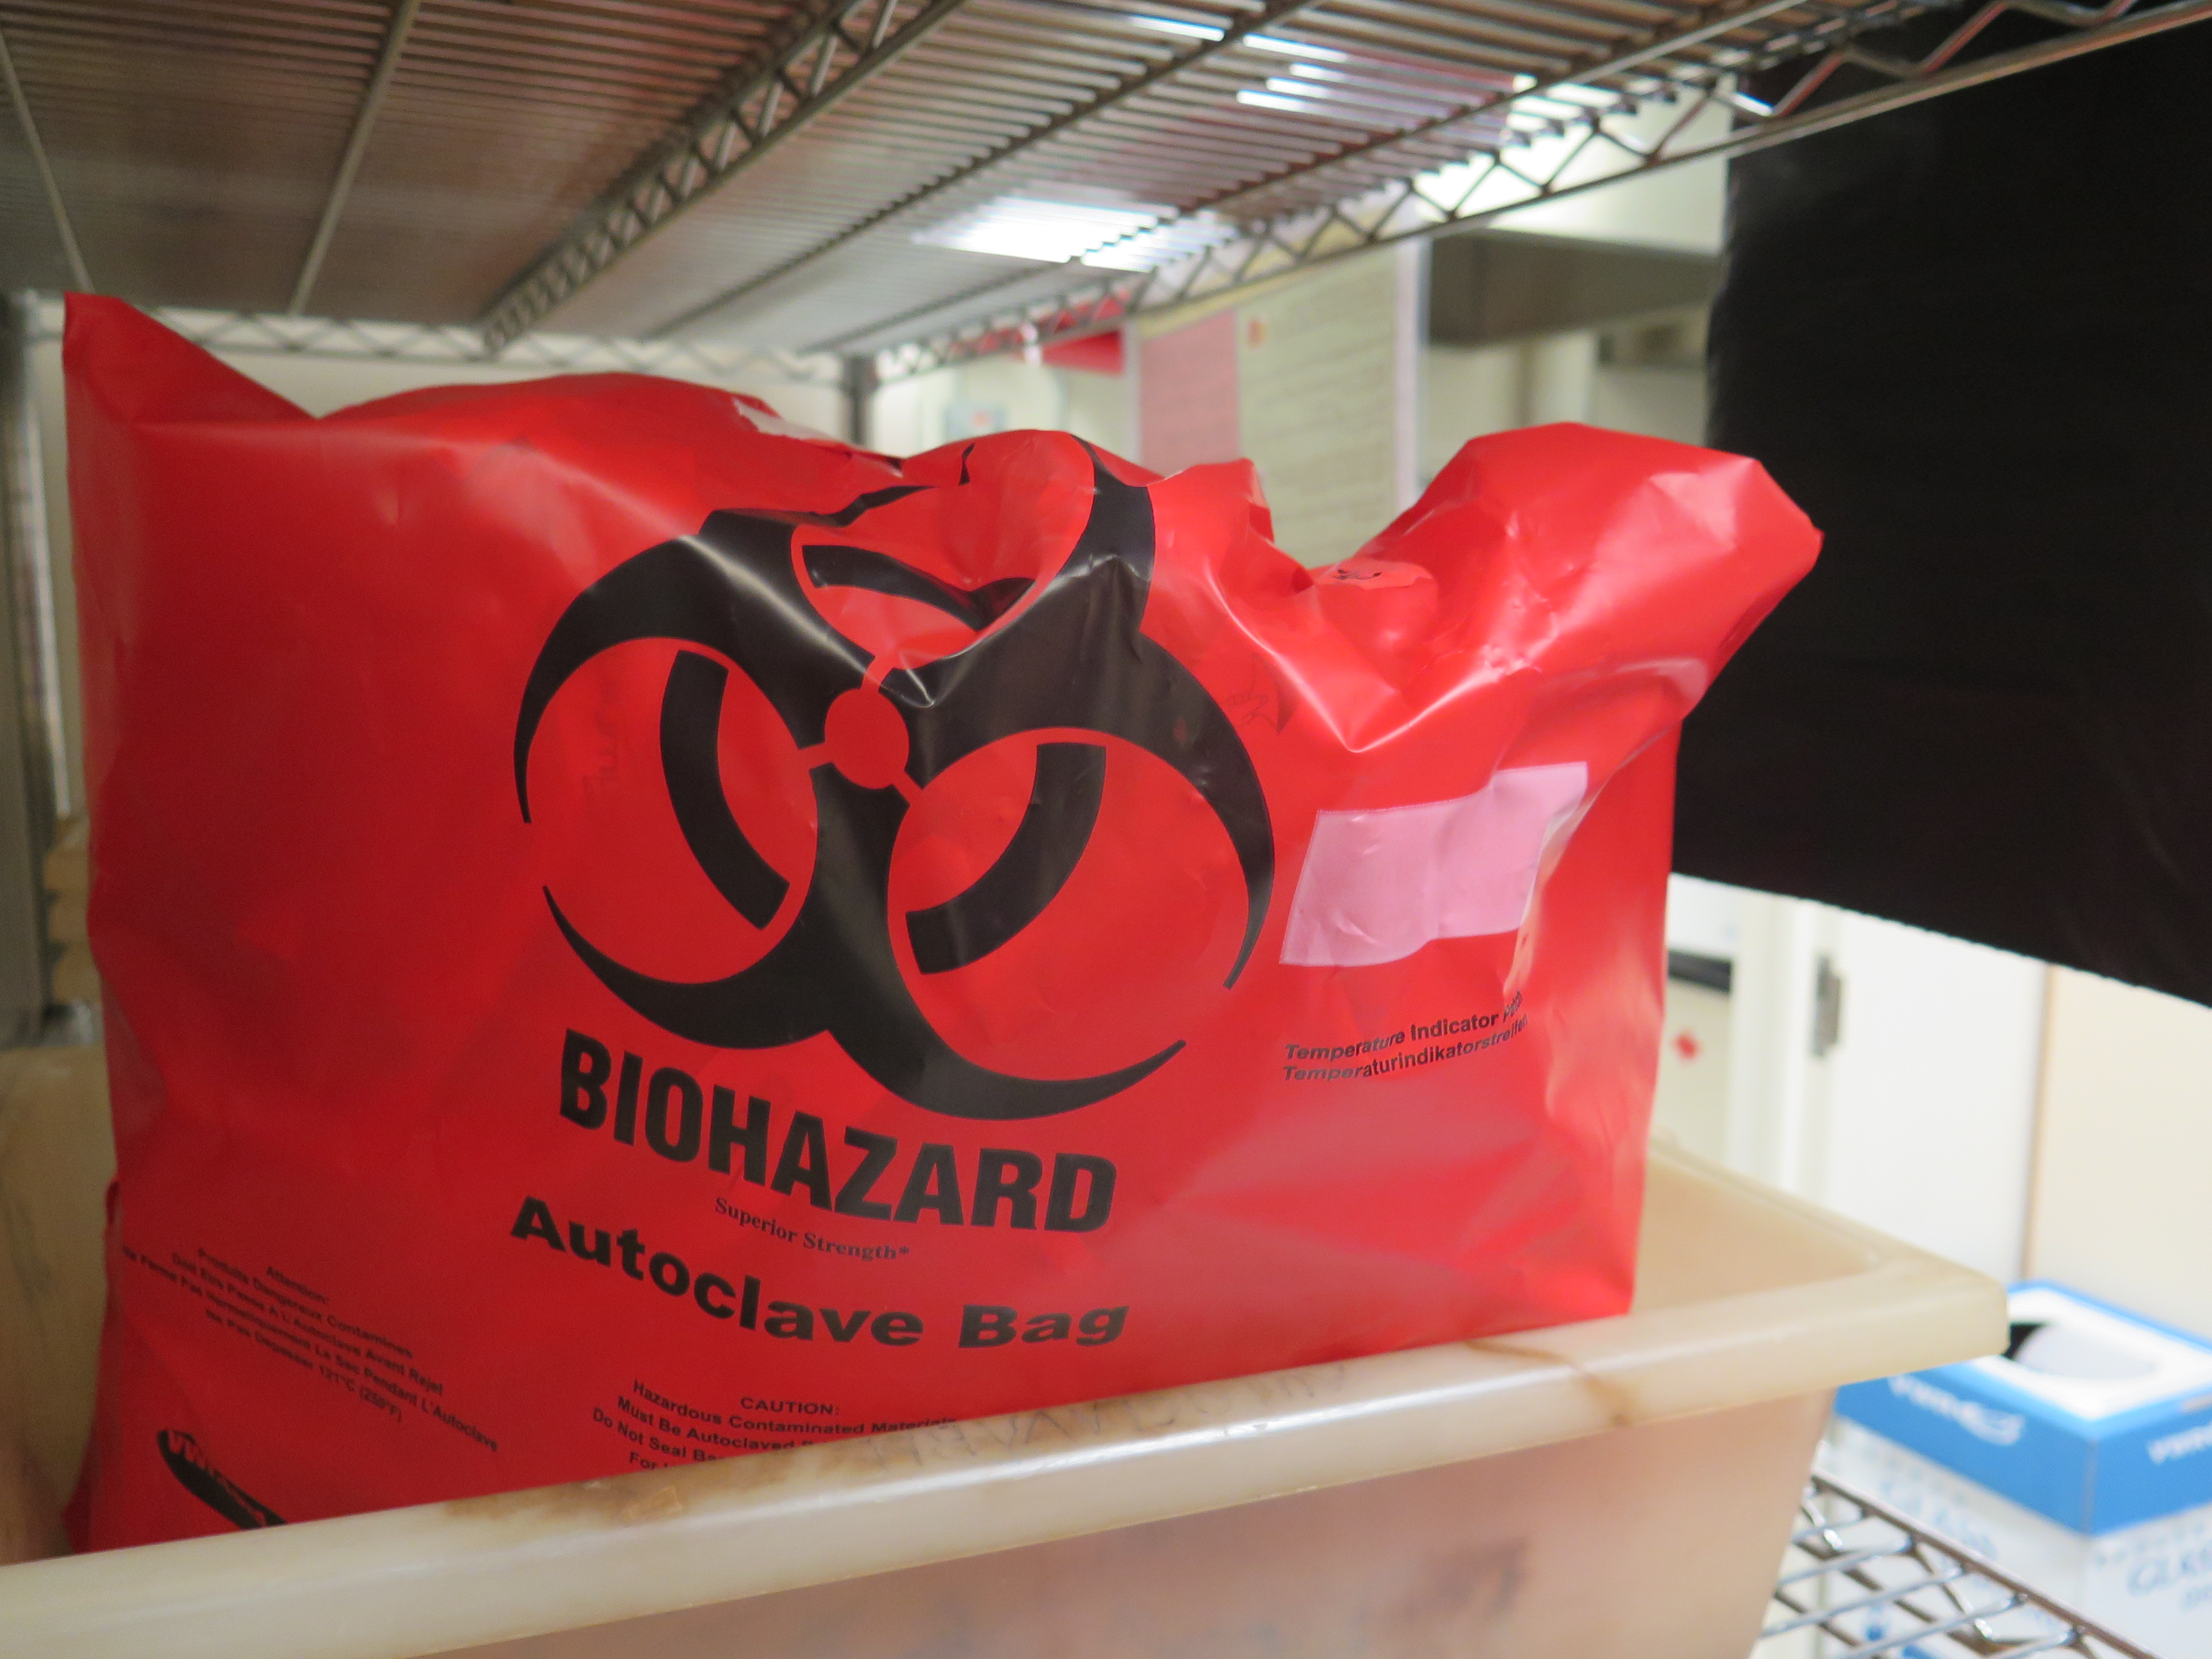 Biohazardous waste in an autoclave bag.